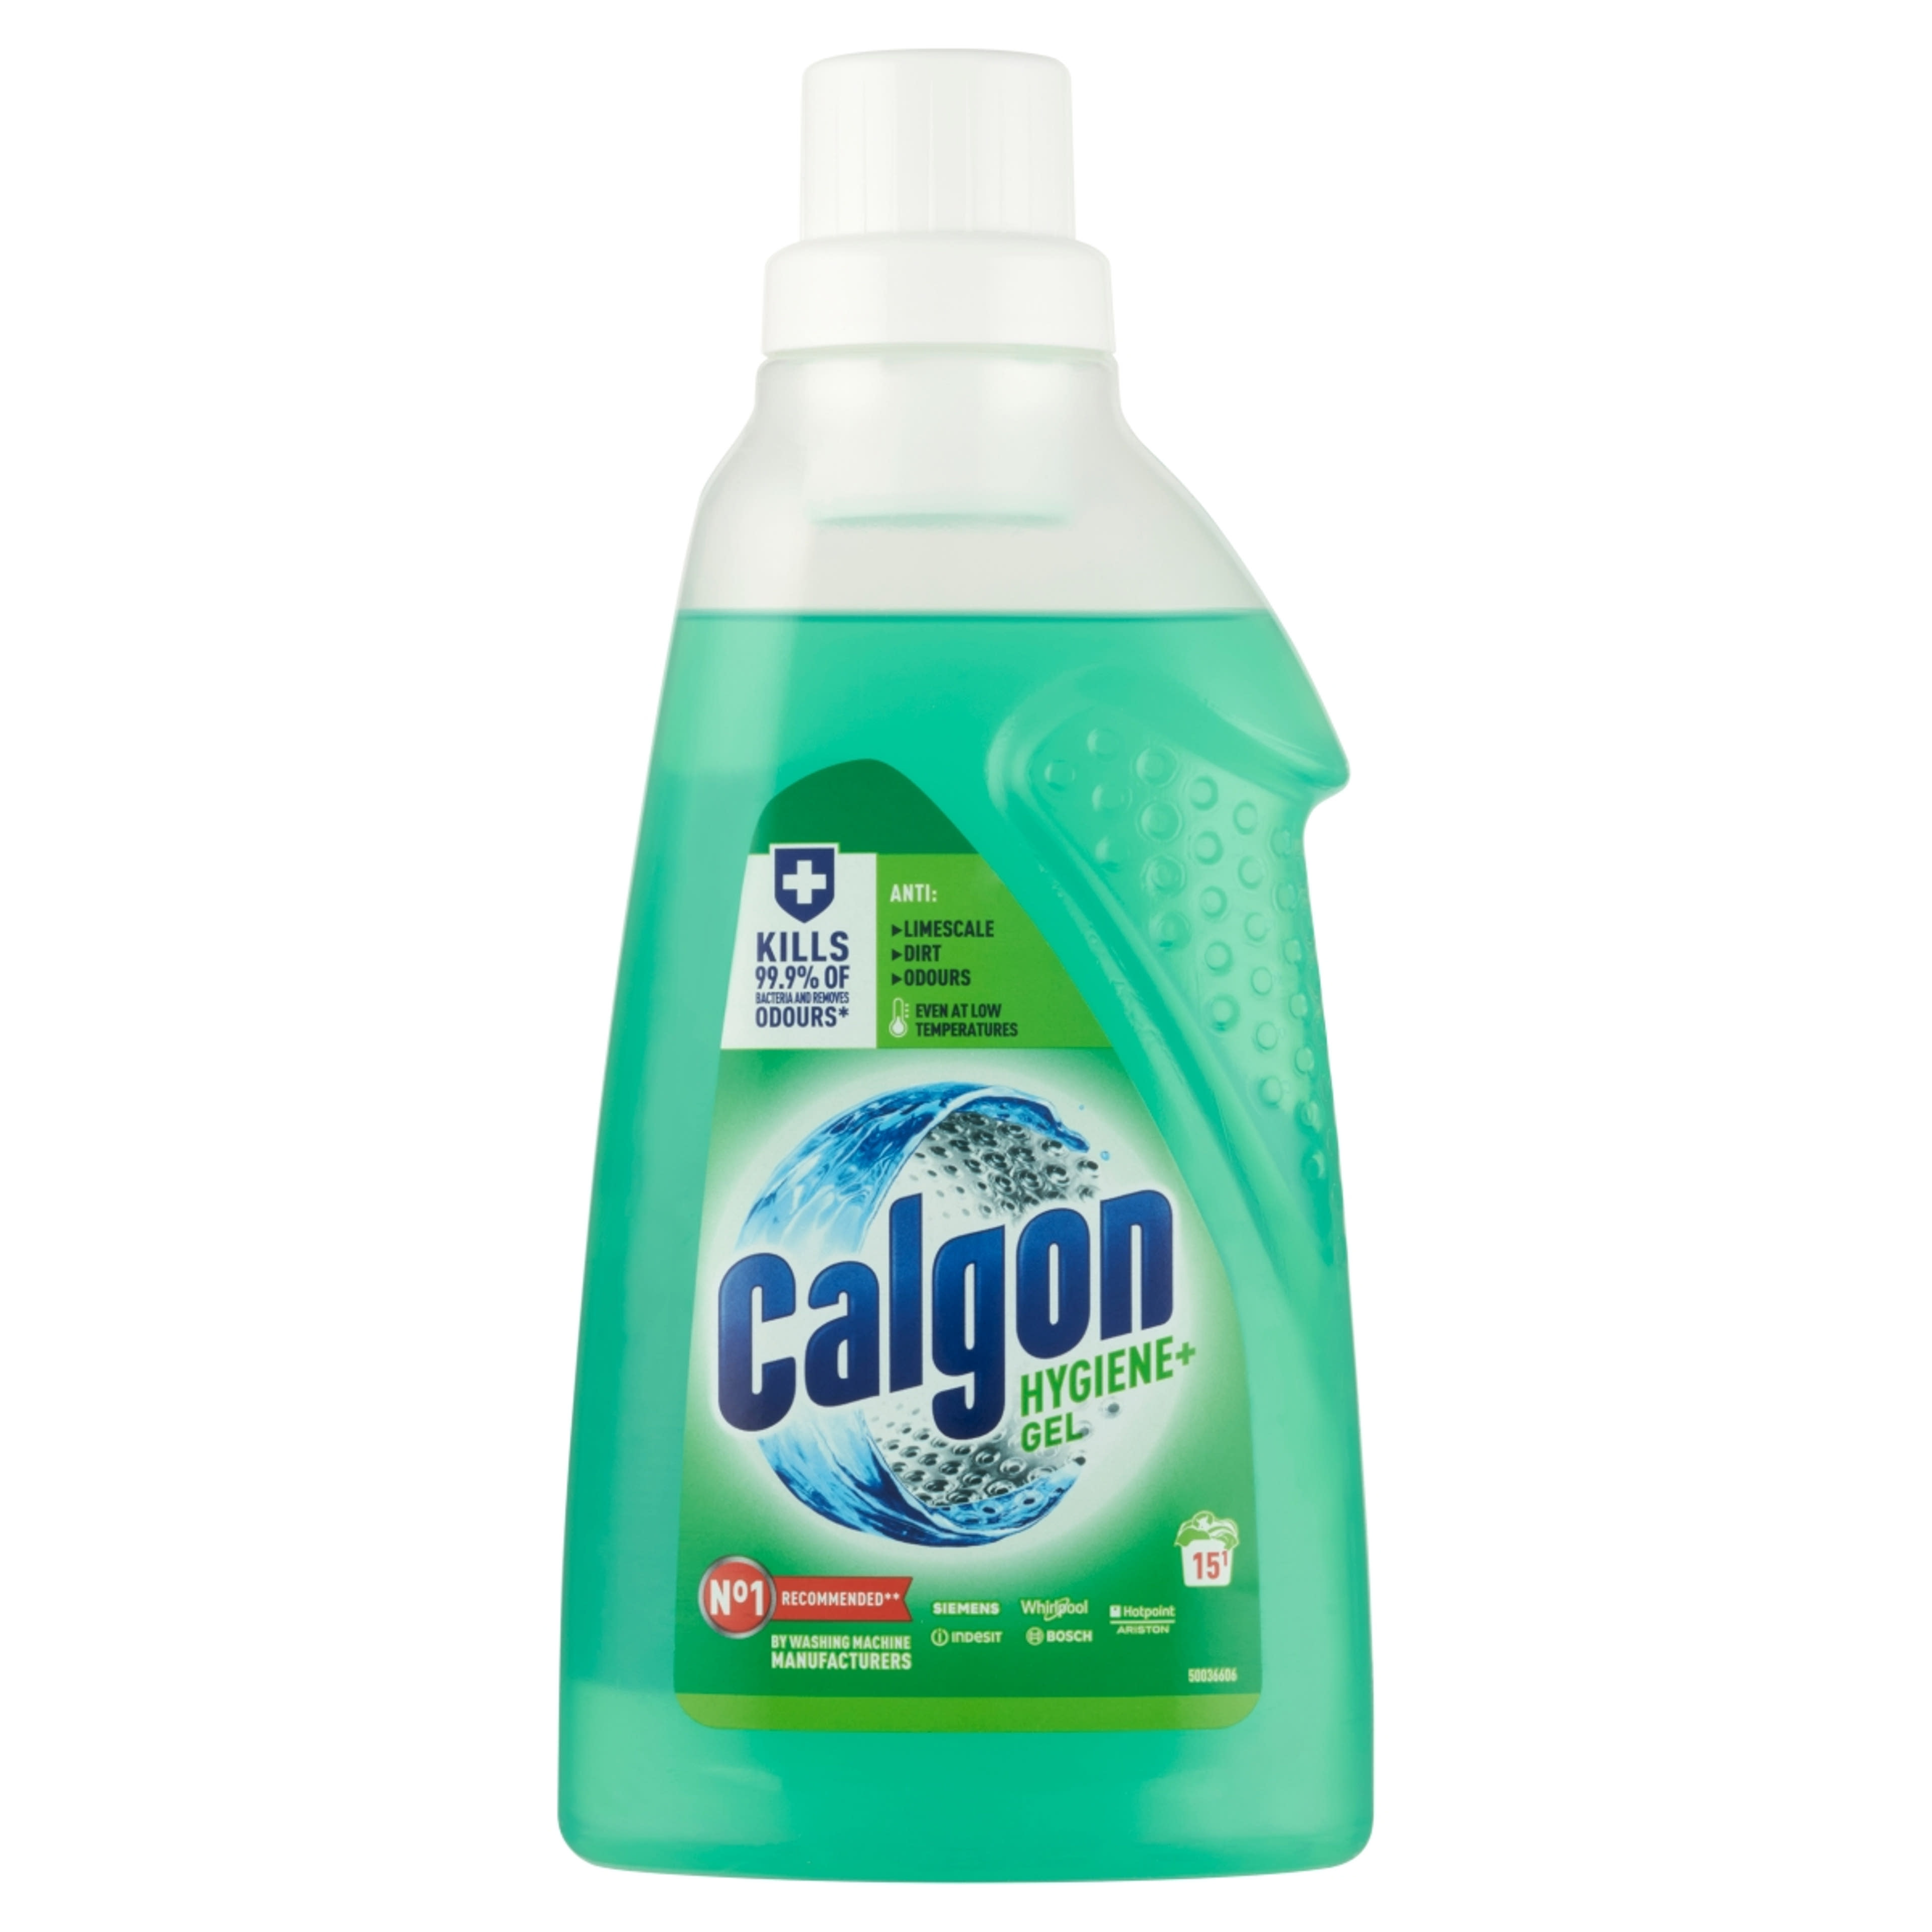 Calgon Hygiene Gel vízlágyító - 750 ml